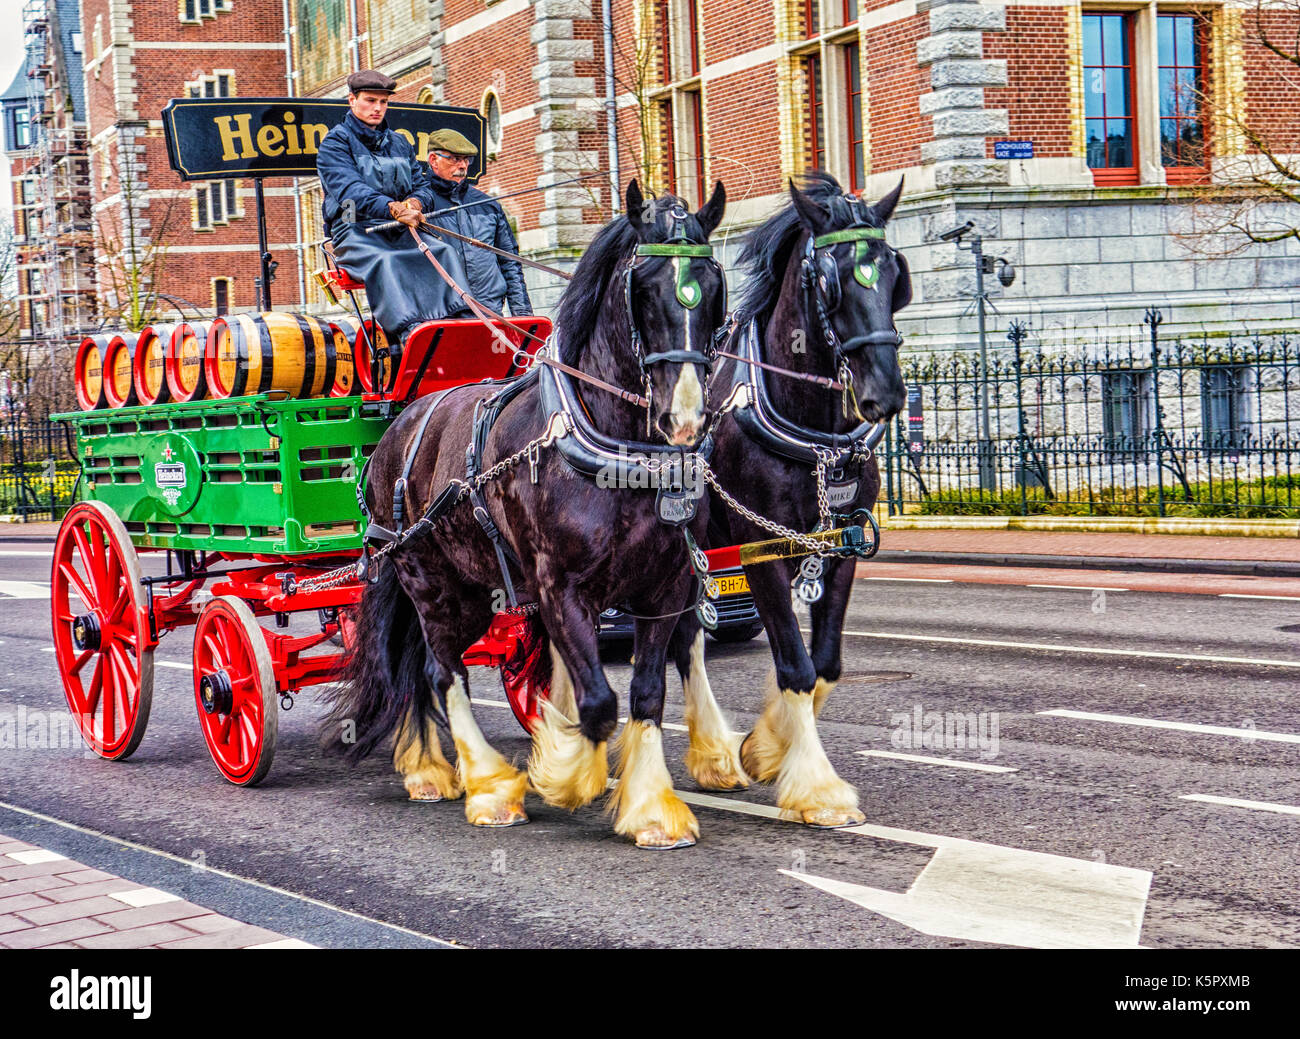 Amsterdam, Netherlands - Mar 25, 2016: Heineken Beer Wagon goes down street Stock Photo